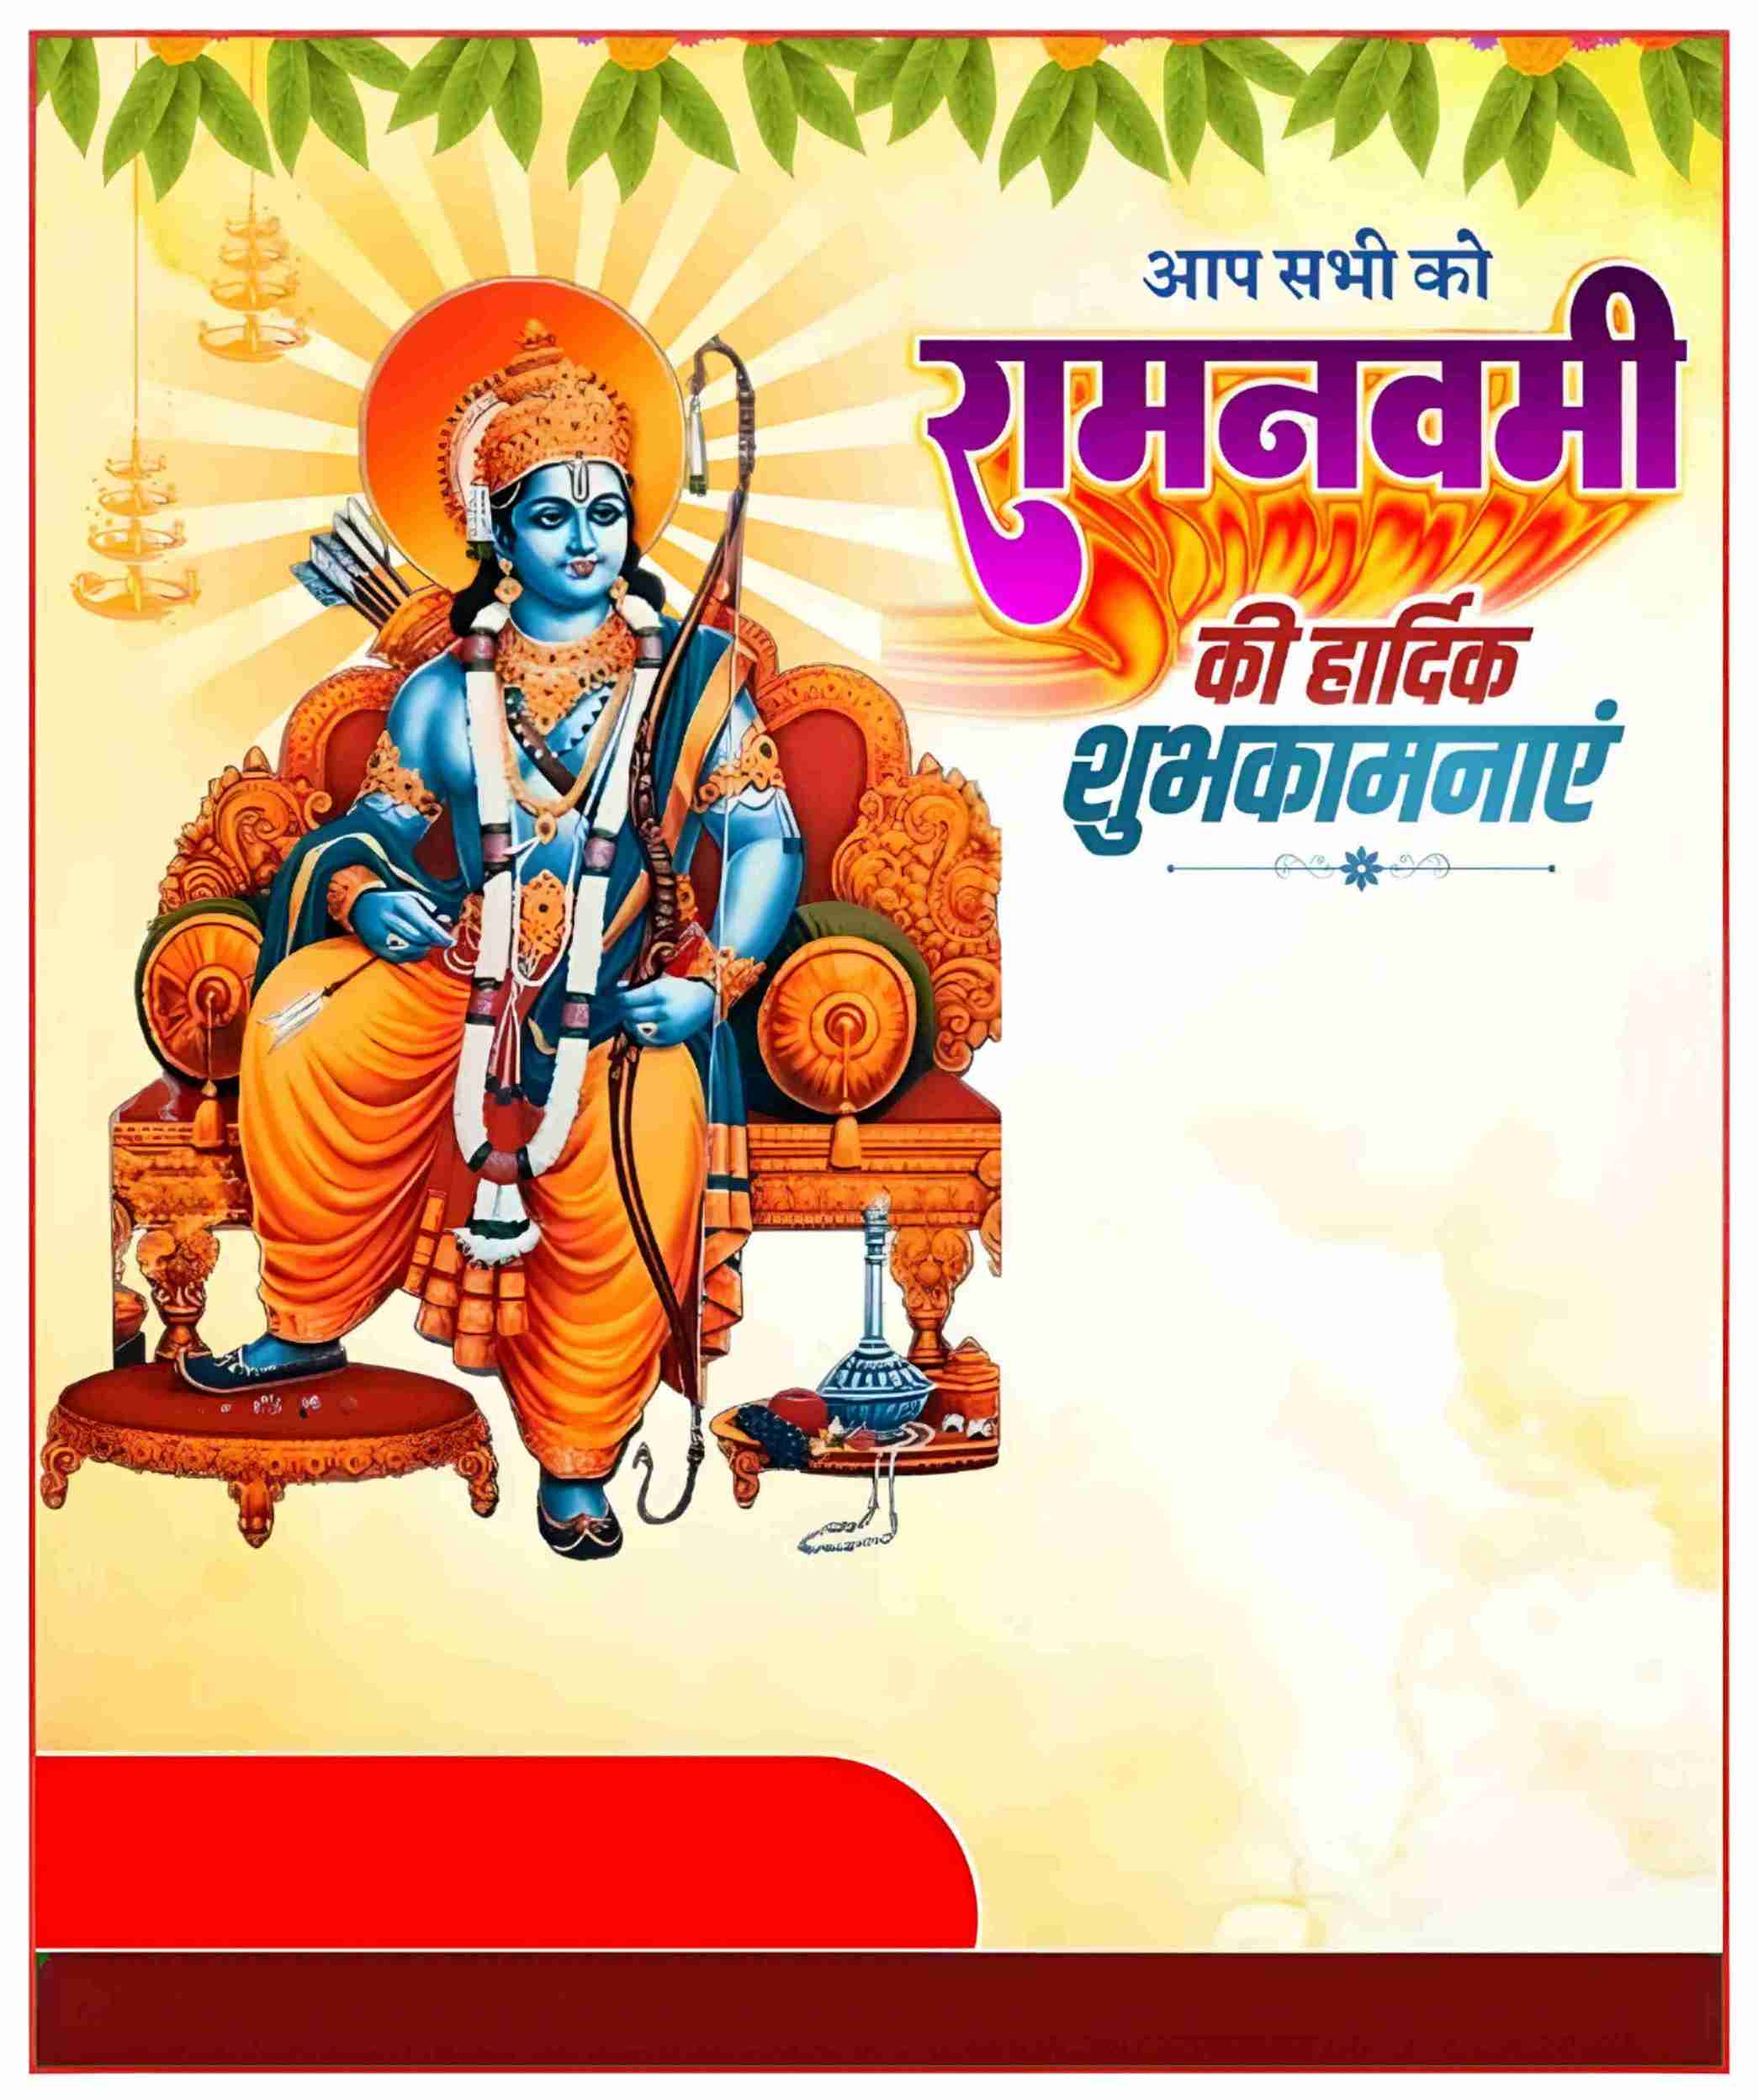 Ram-Navami-wishes-banner-background-image-in-Hindi